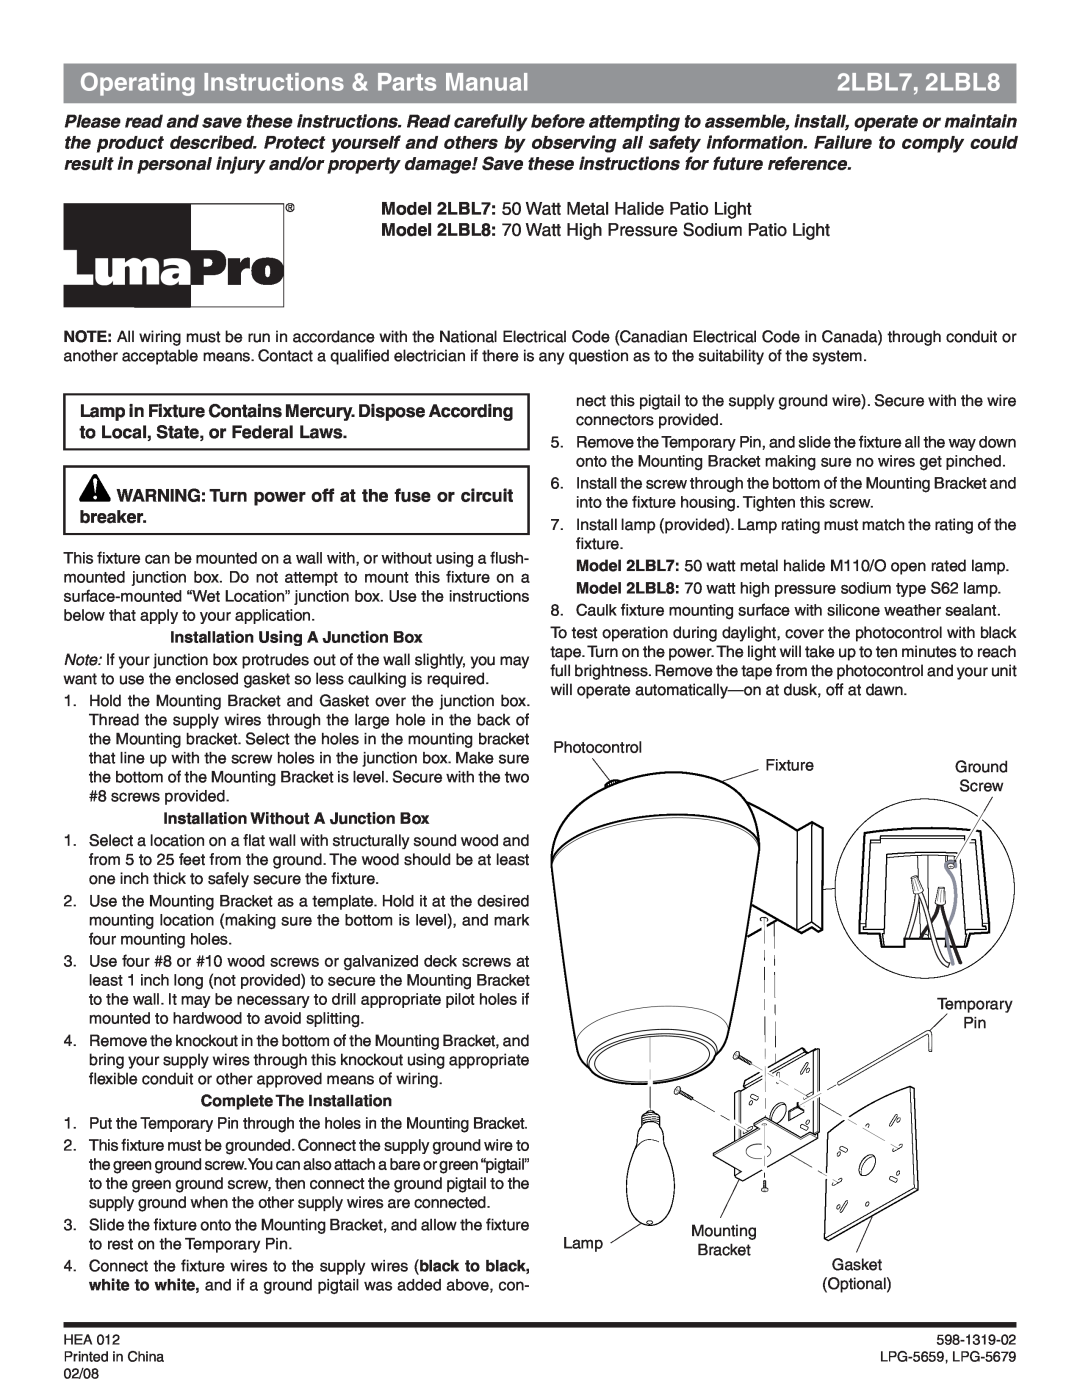 Heath Zenith manual Operating Instructions & Parts Manual, 2LBL7, 2LBL8, Model 2LBL7 50 Watt Metal Halide Patio Light 